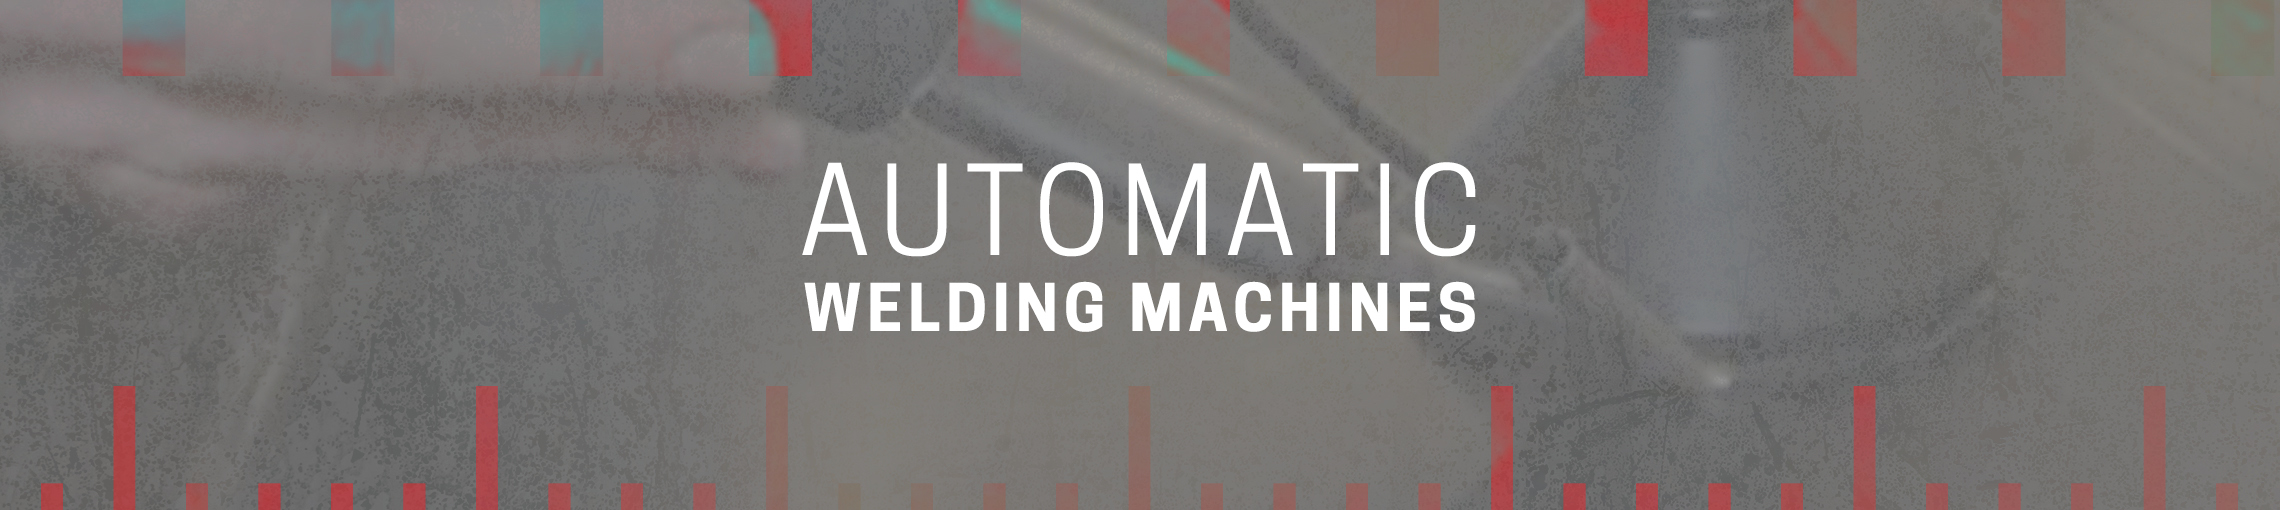 Automatic Welding Machines